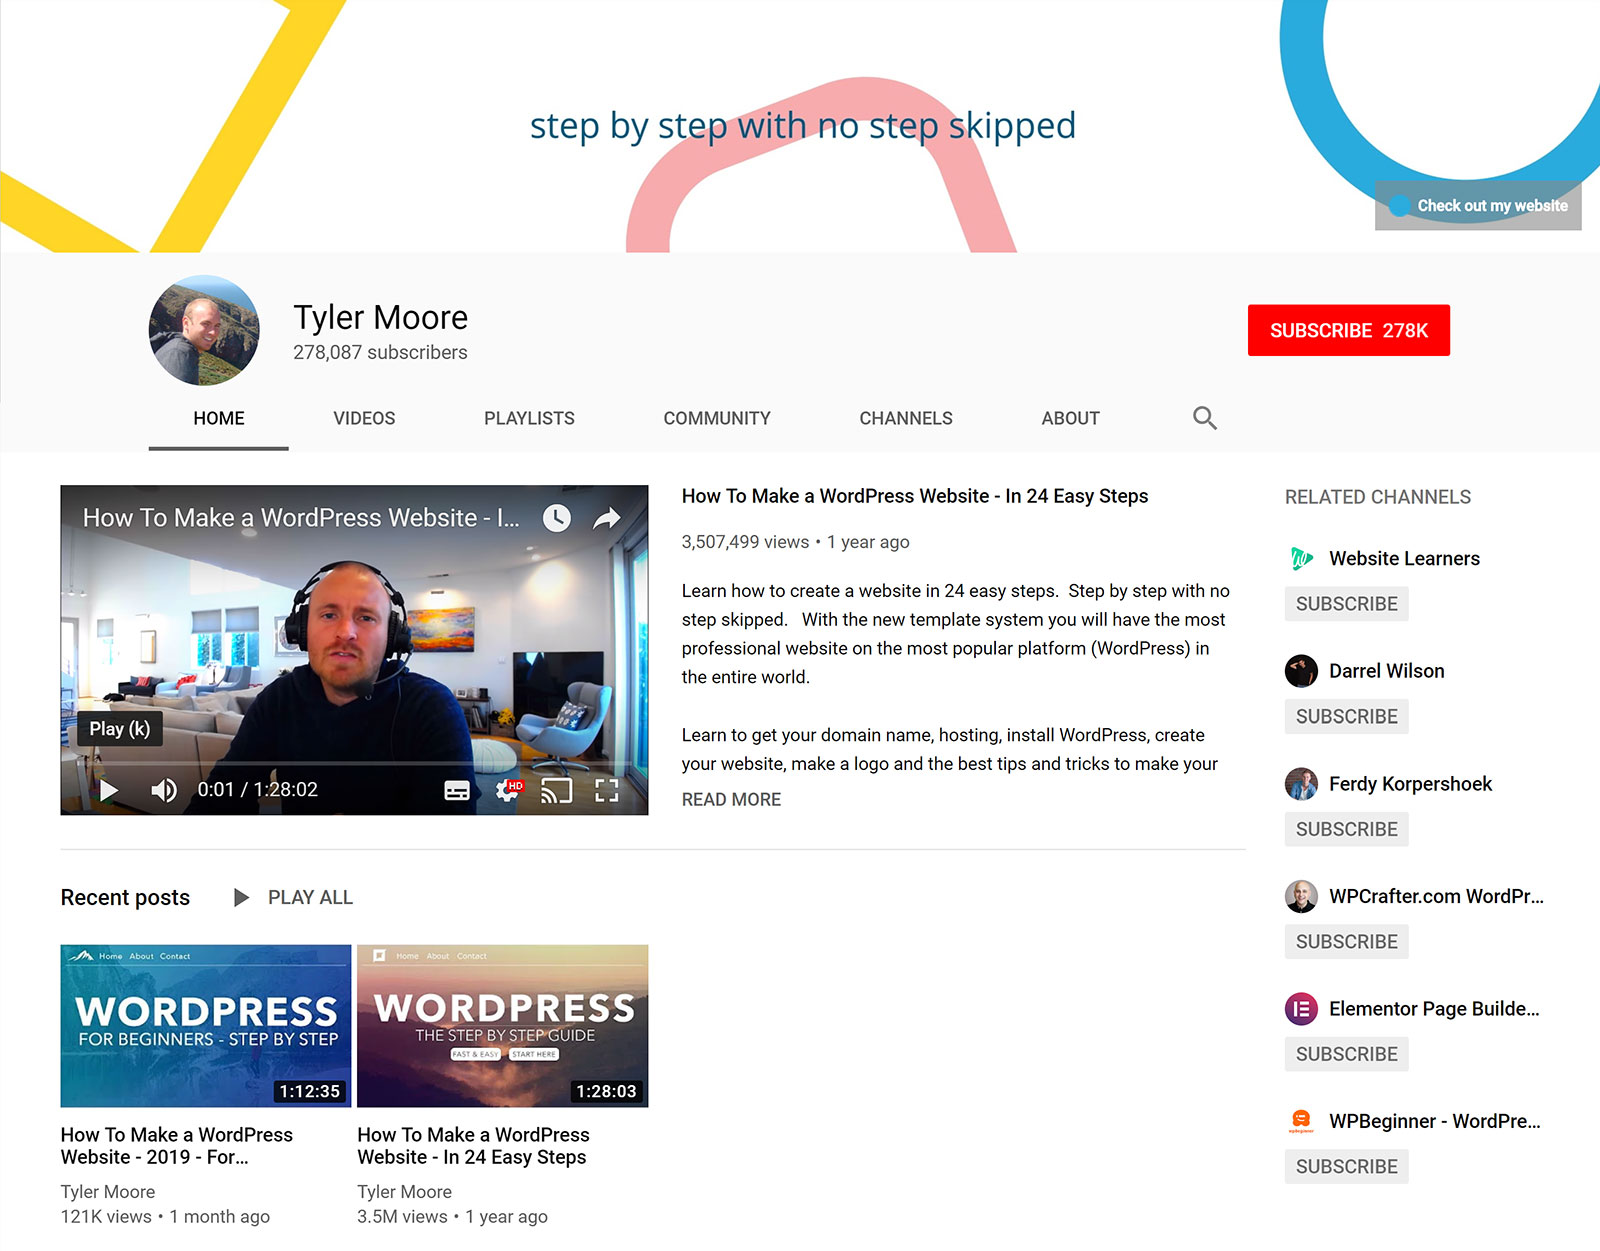 Tyler Moore - YouTube Channel